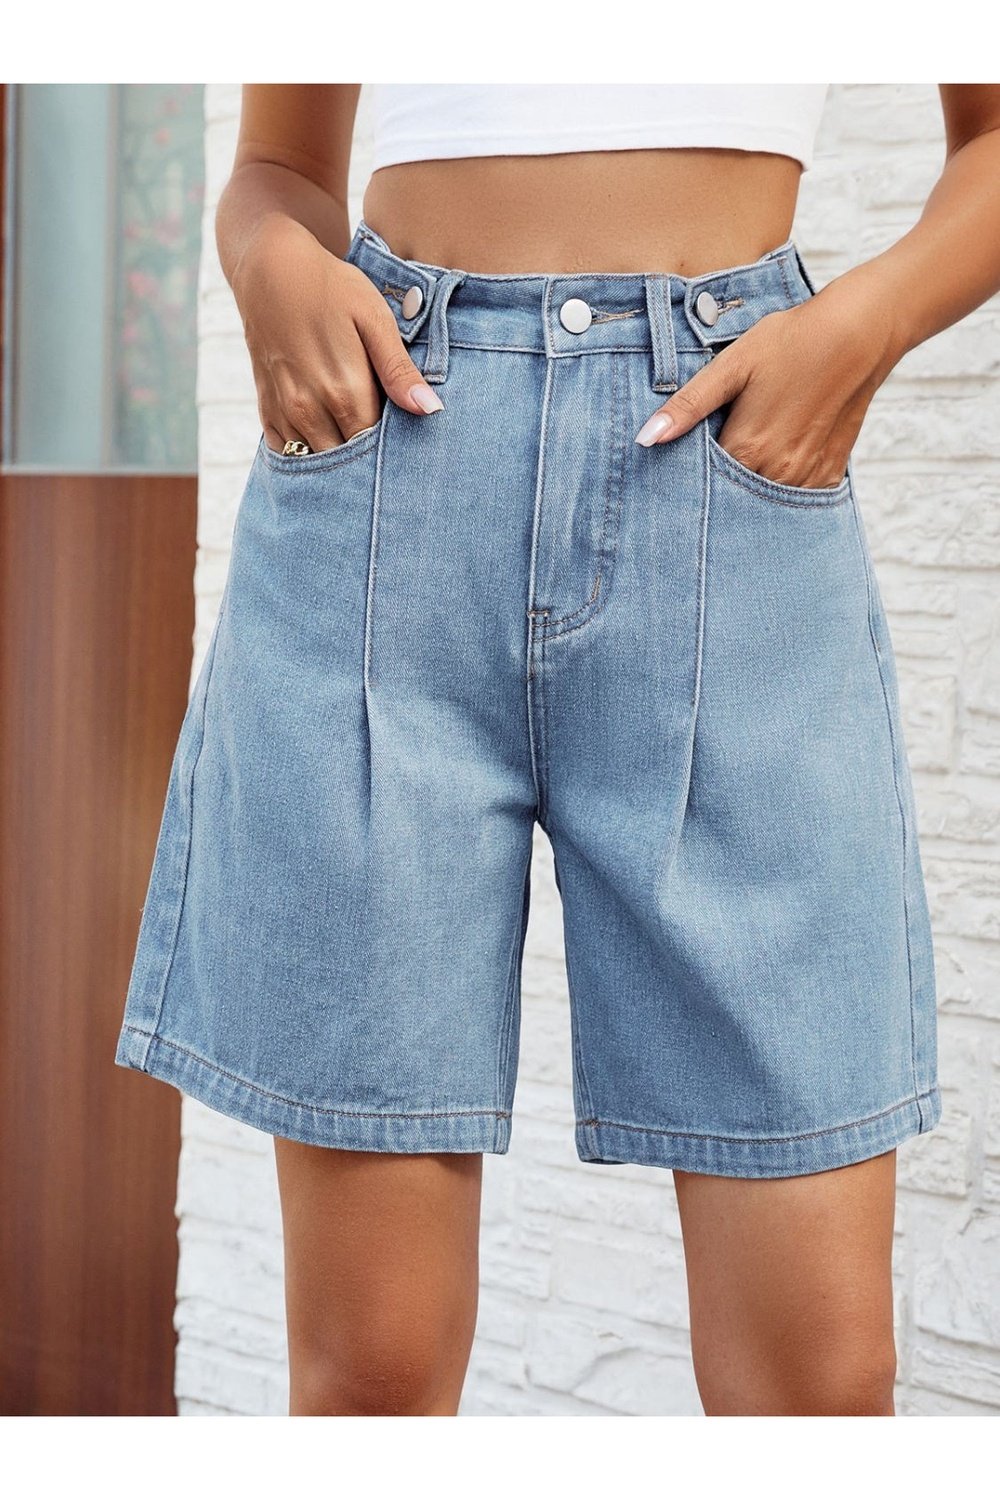 High Waist Denim Shorts with Pockets - Denim Shorts - FITGGINS